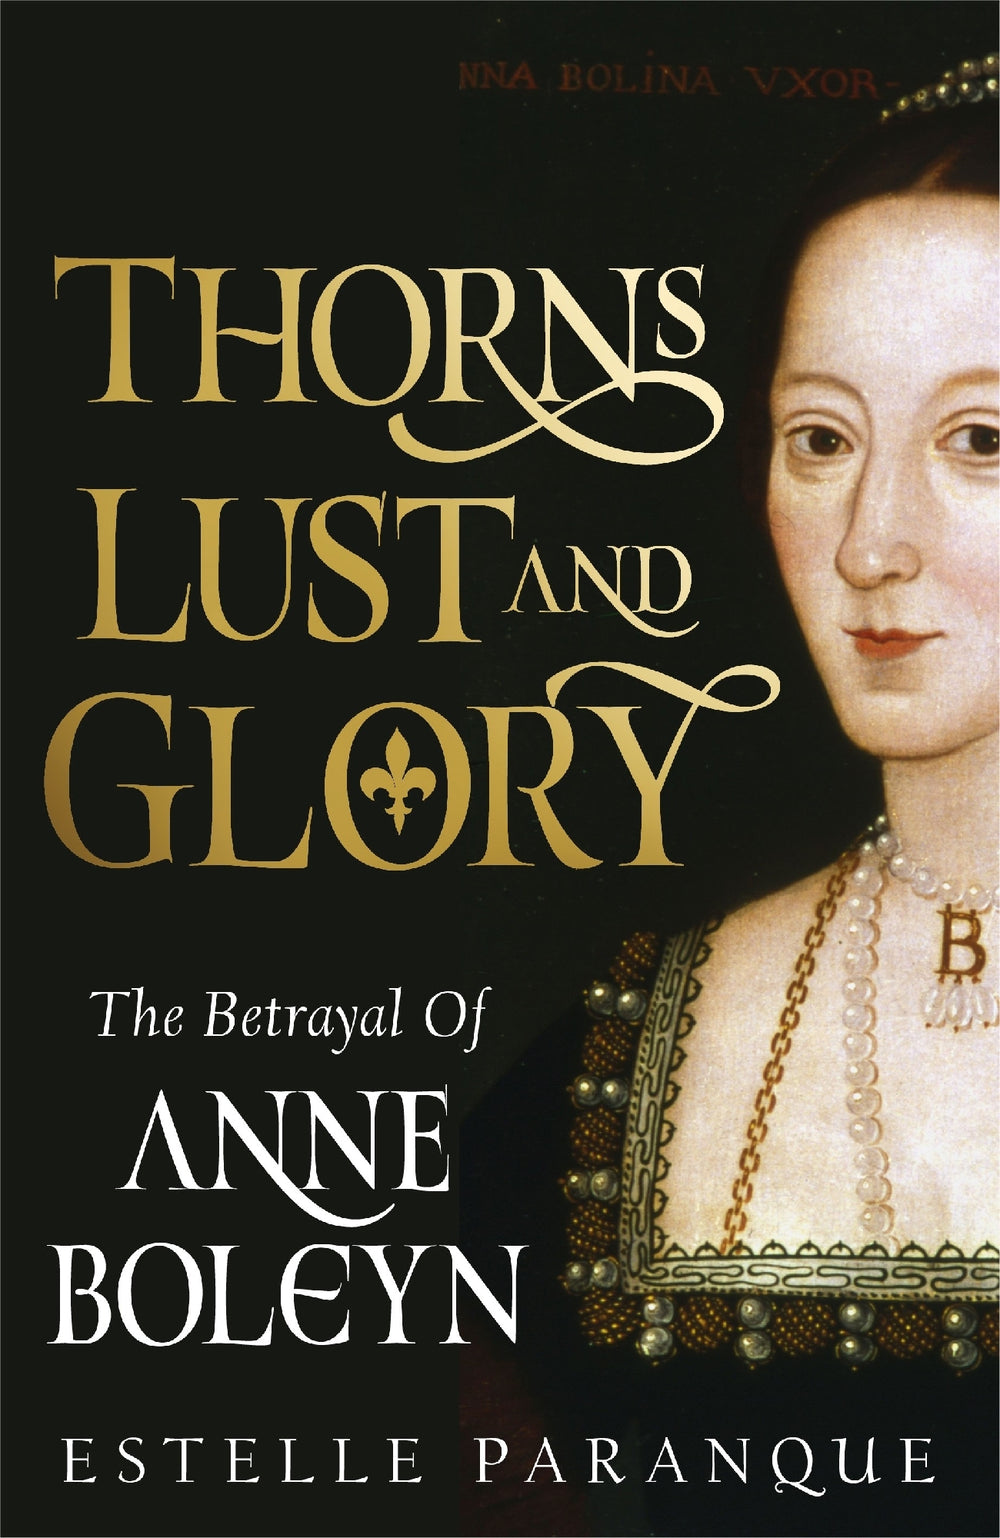 Thorns, Lust and Glory:  The Betrayal of Anne Boleyn